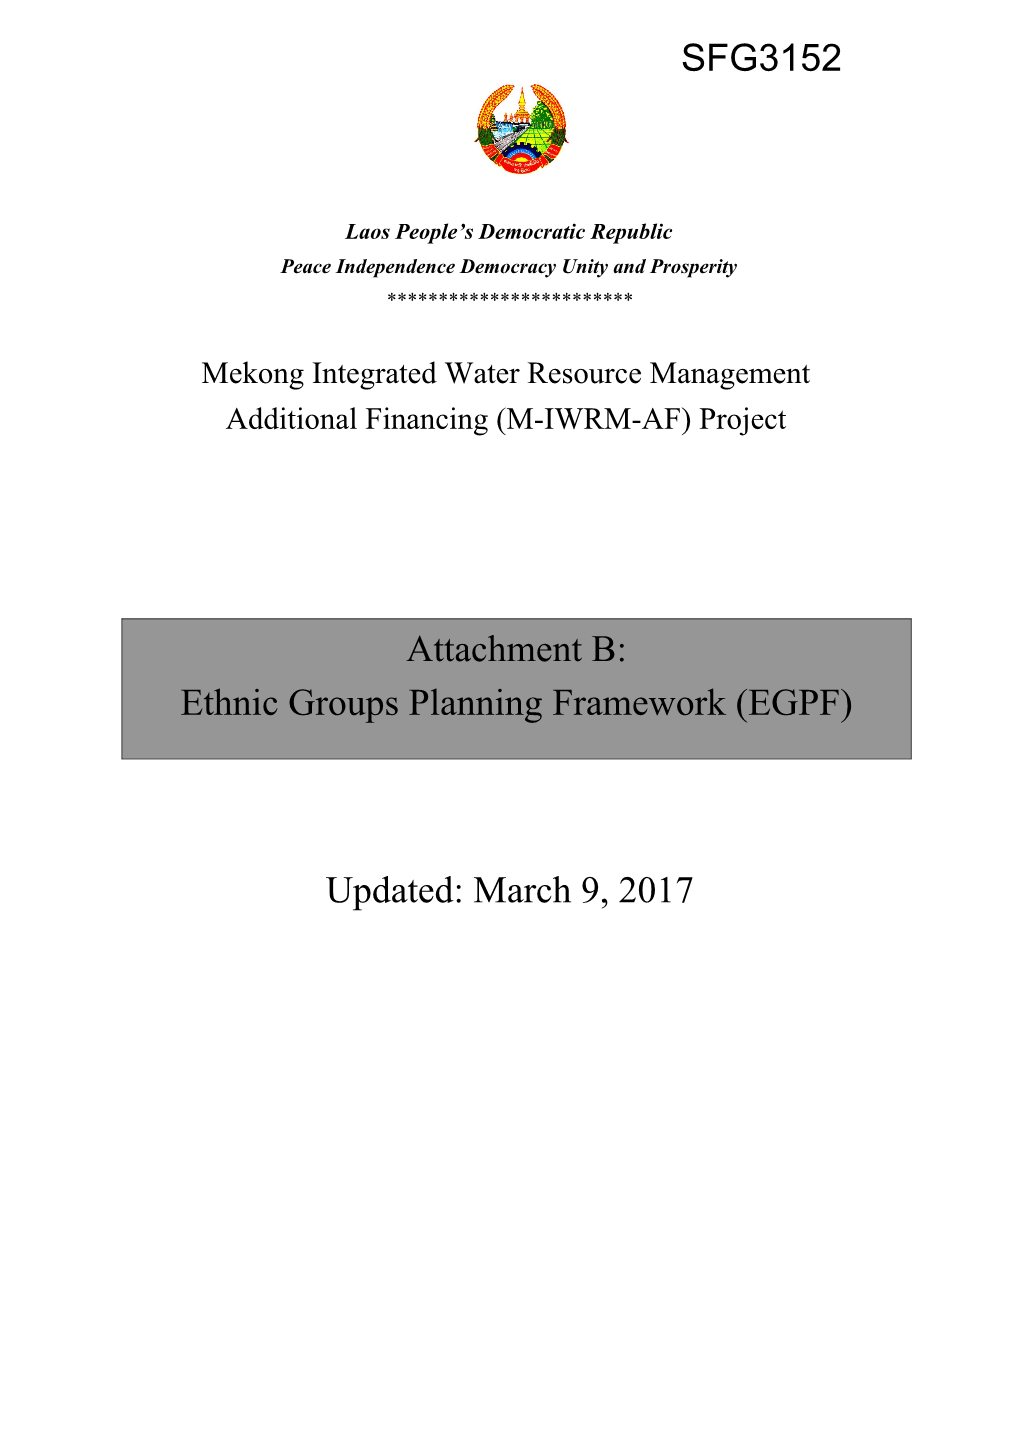 Lao PDR: Ethnic Groups Planning Framework (EGPF)